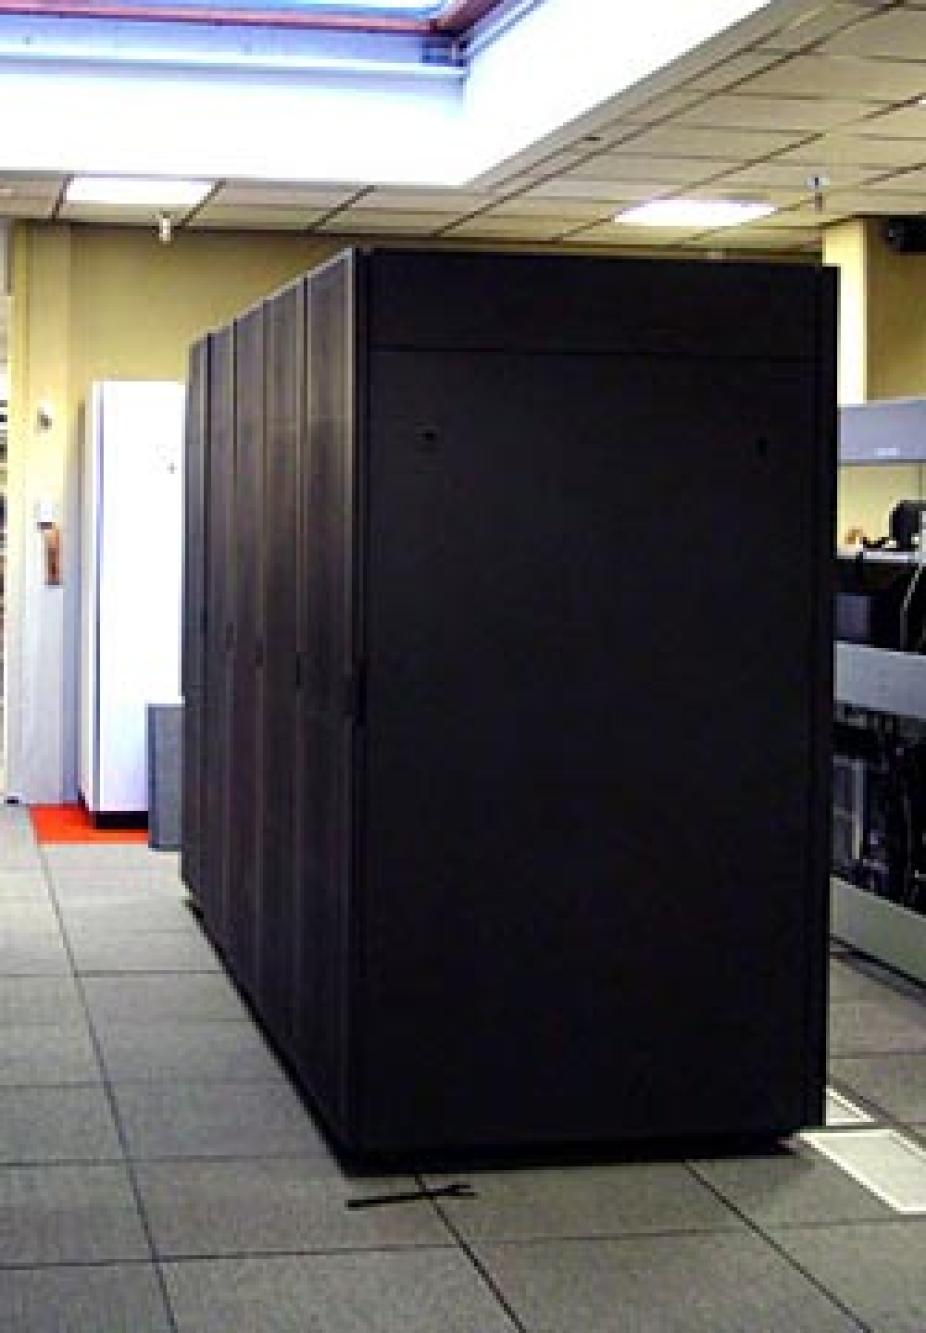 IBM Linux supercomputer